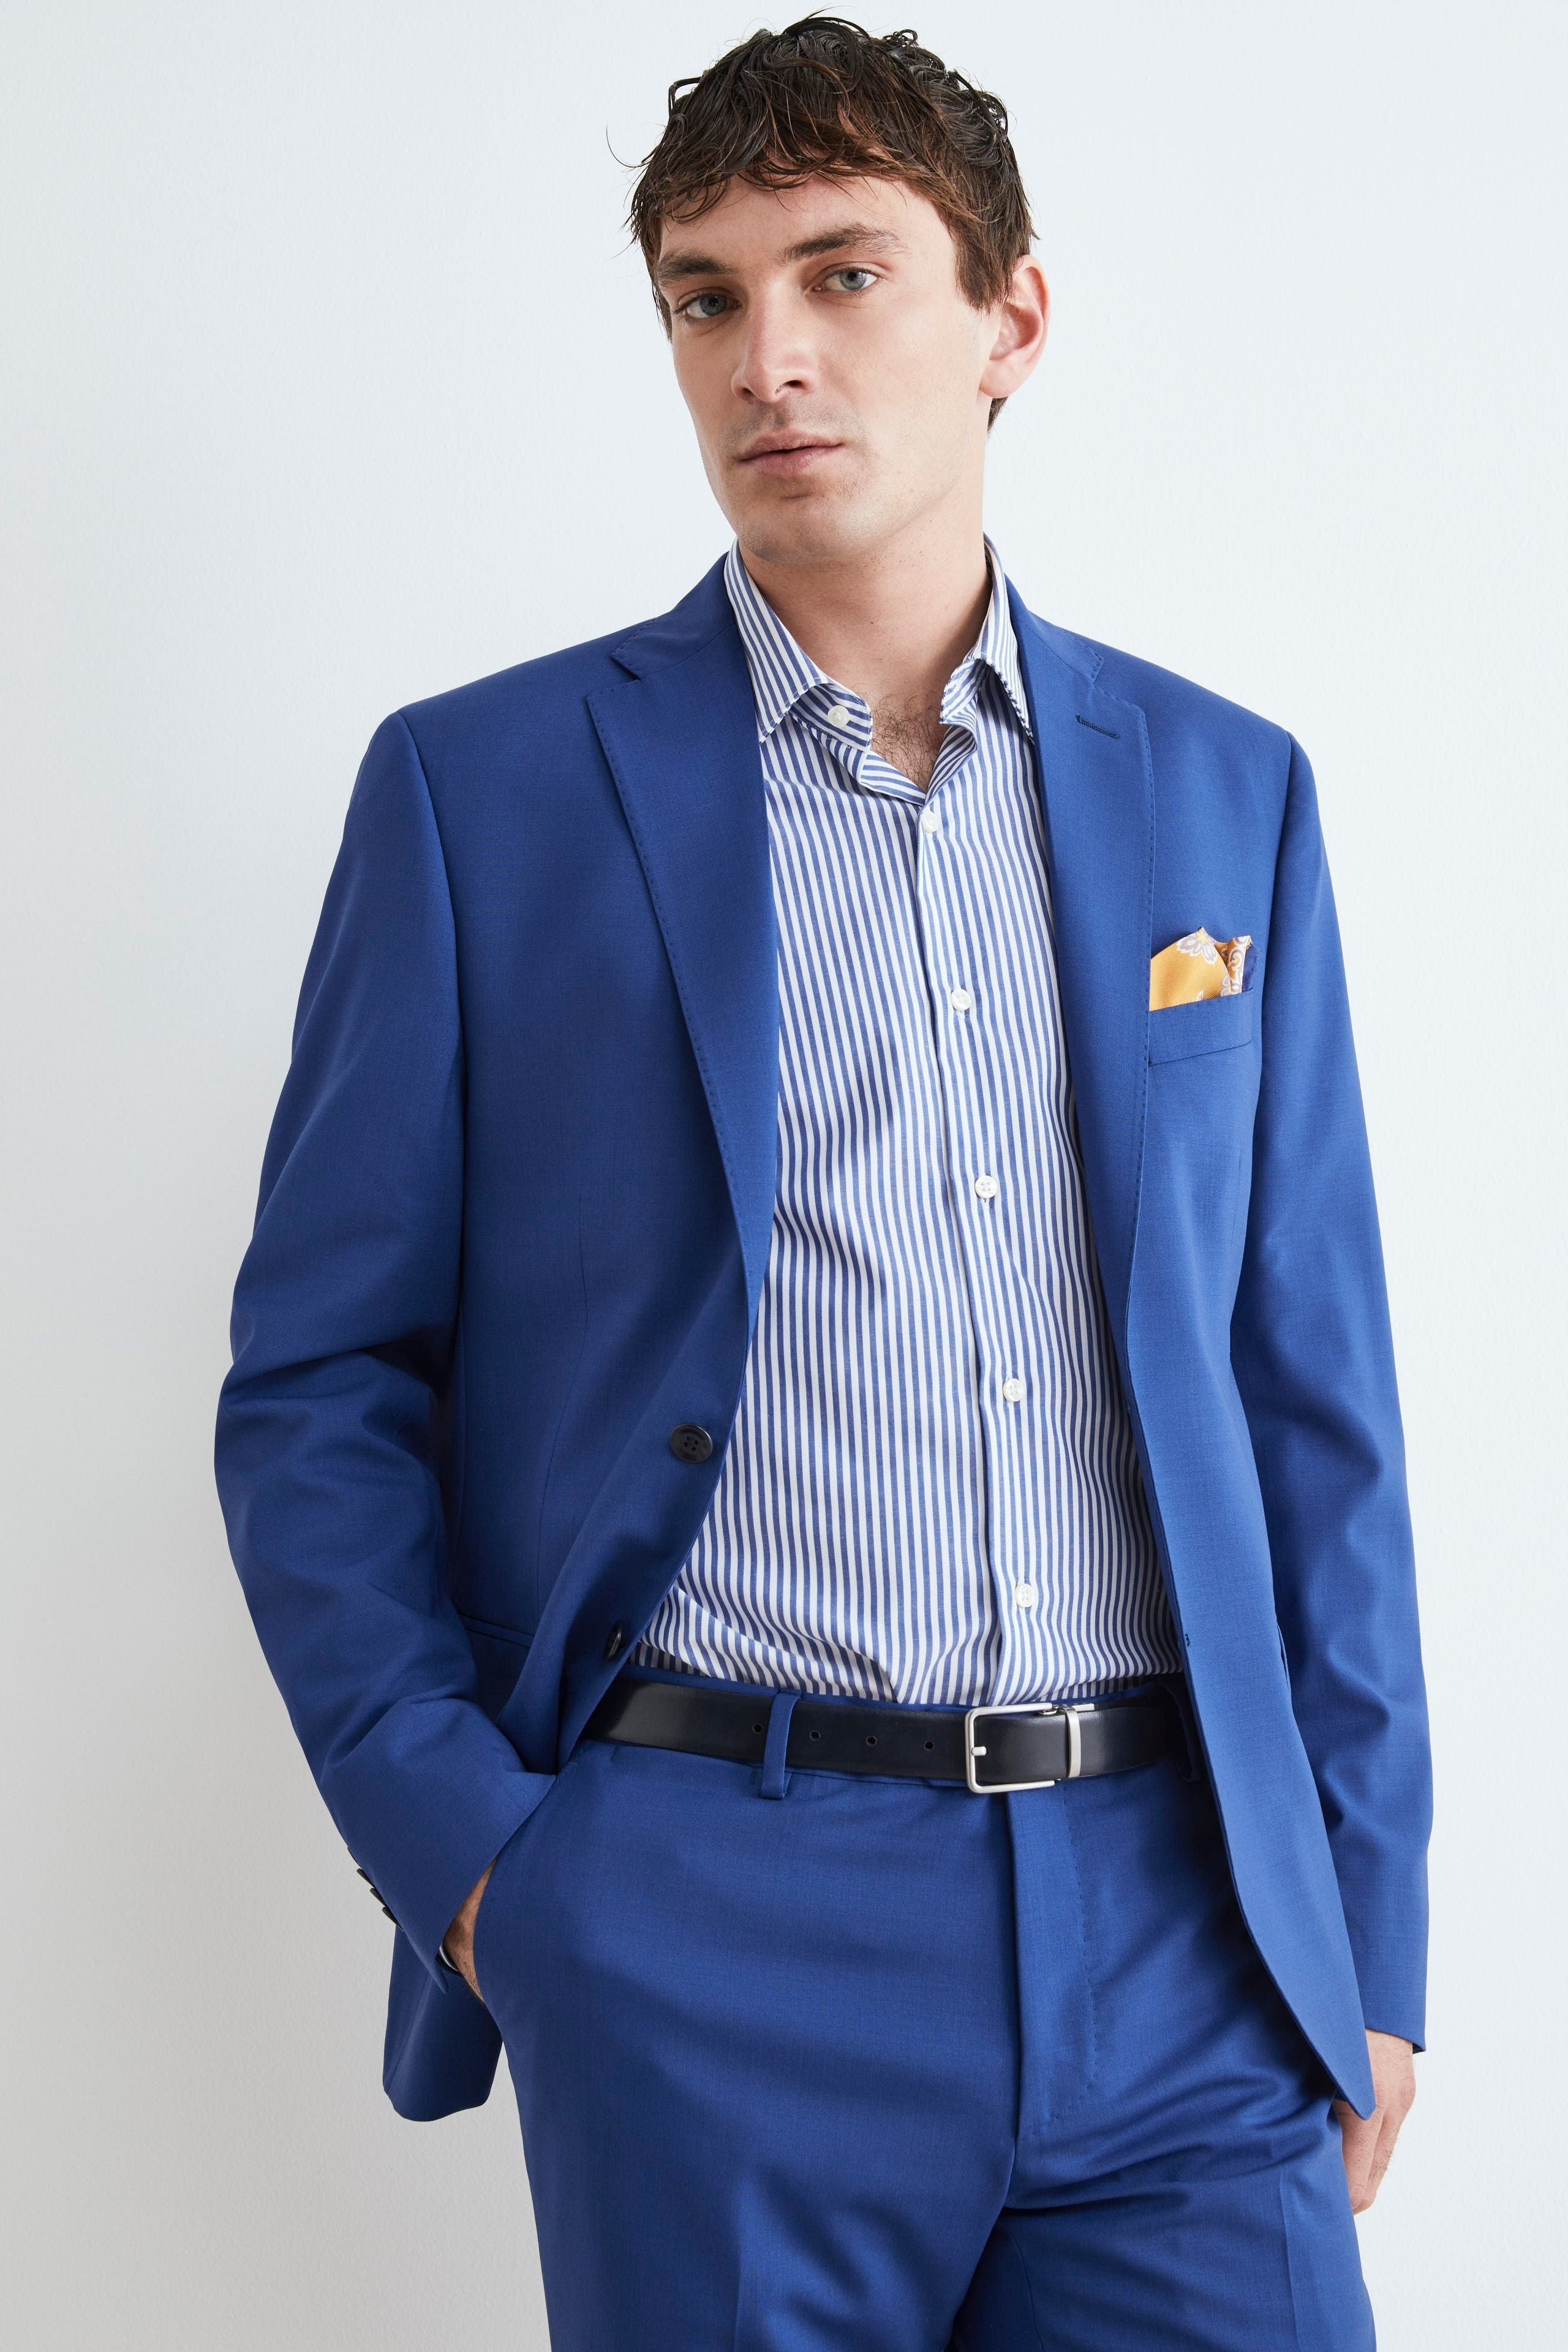 Blue formal Suit - Royal blue